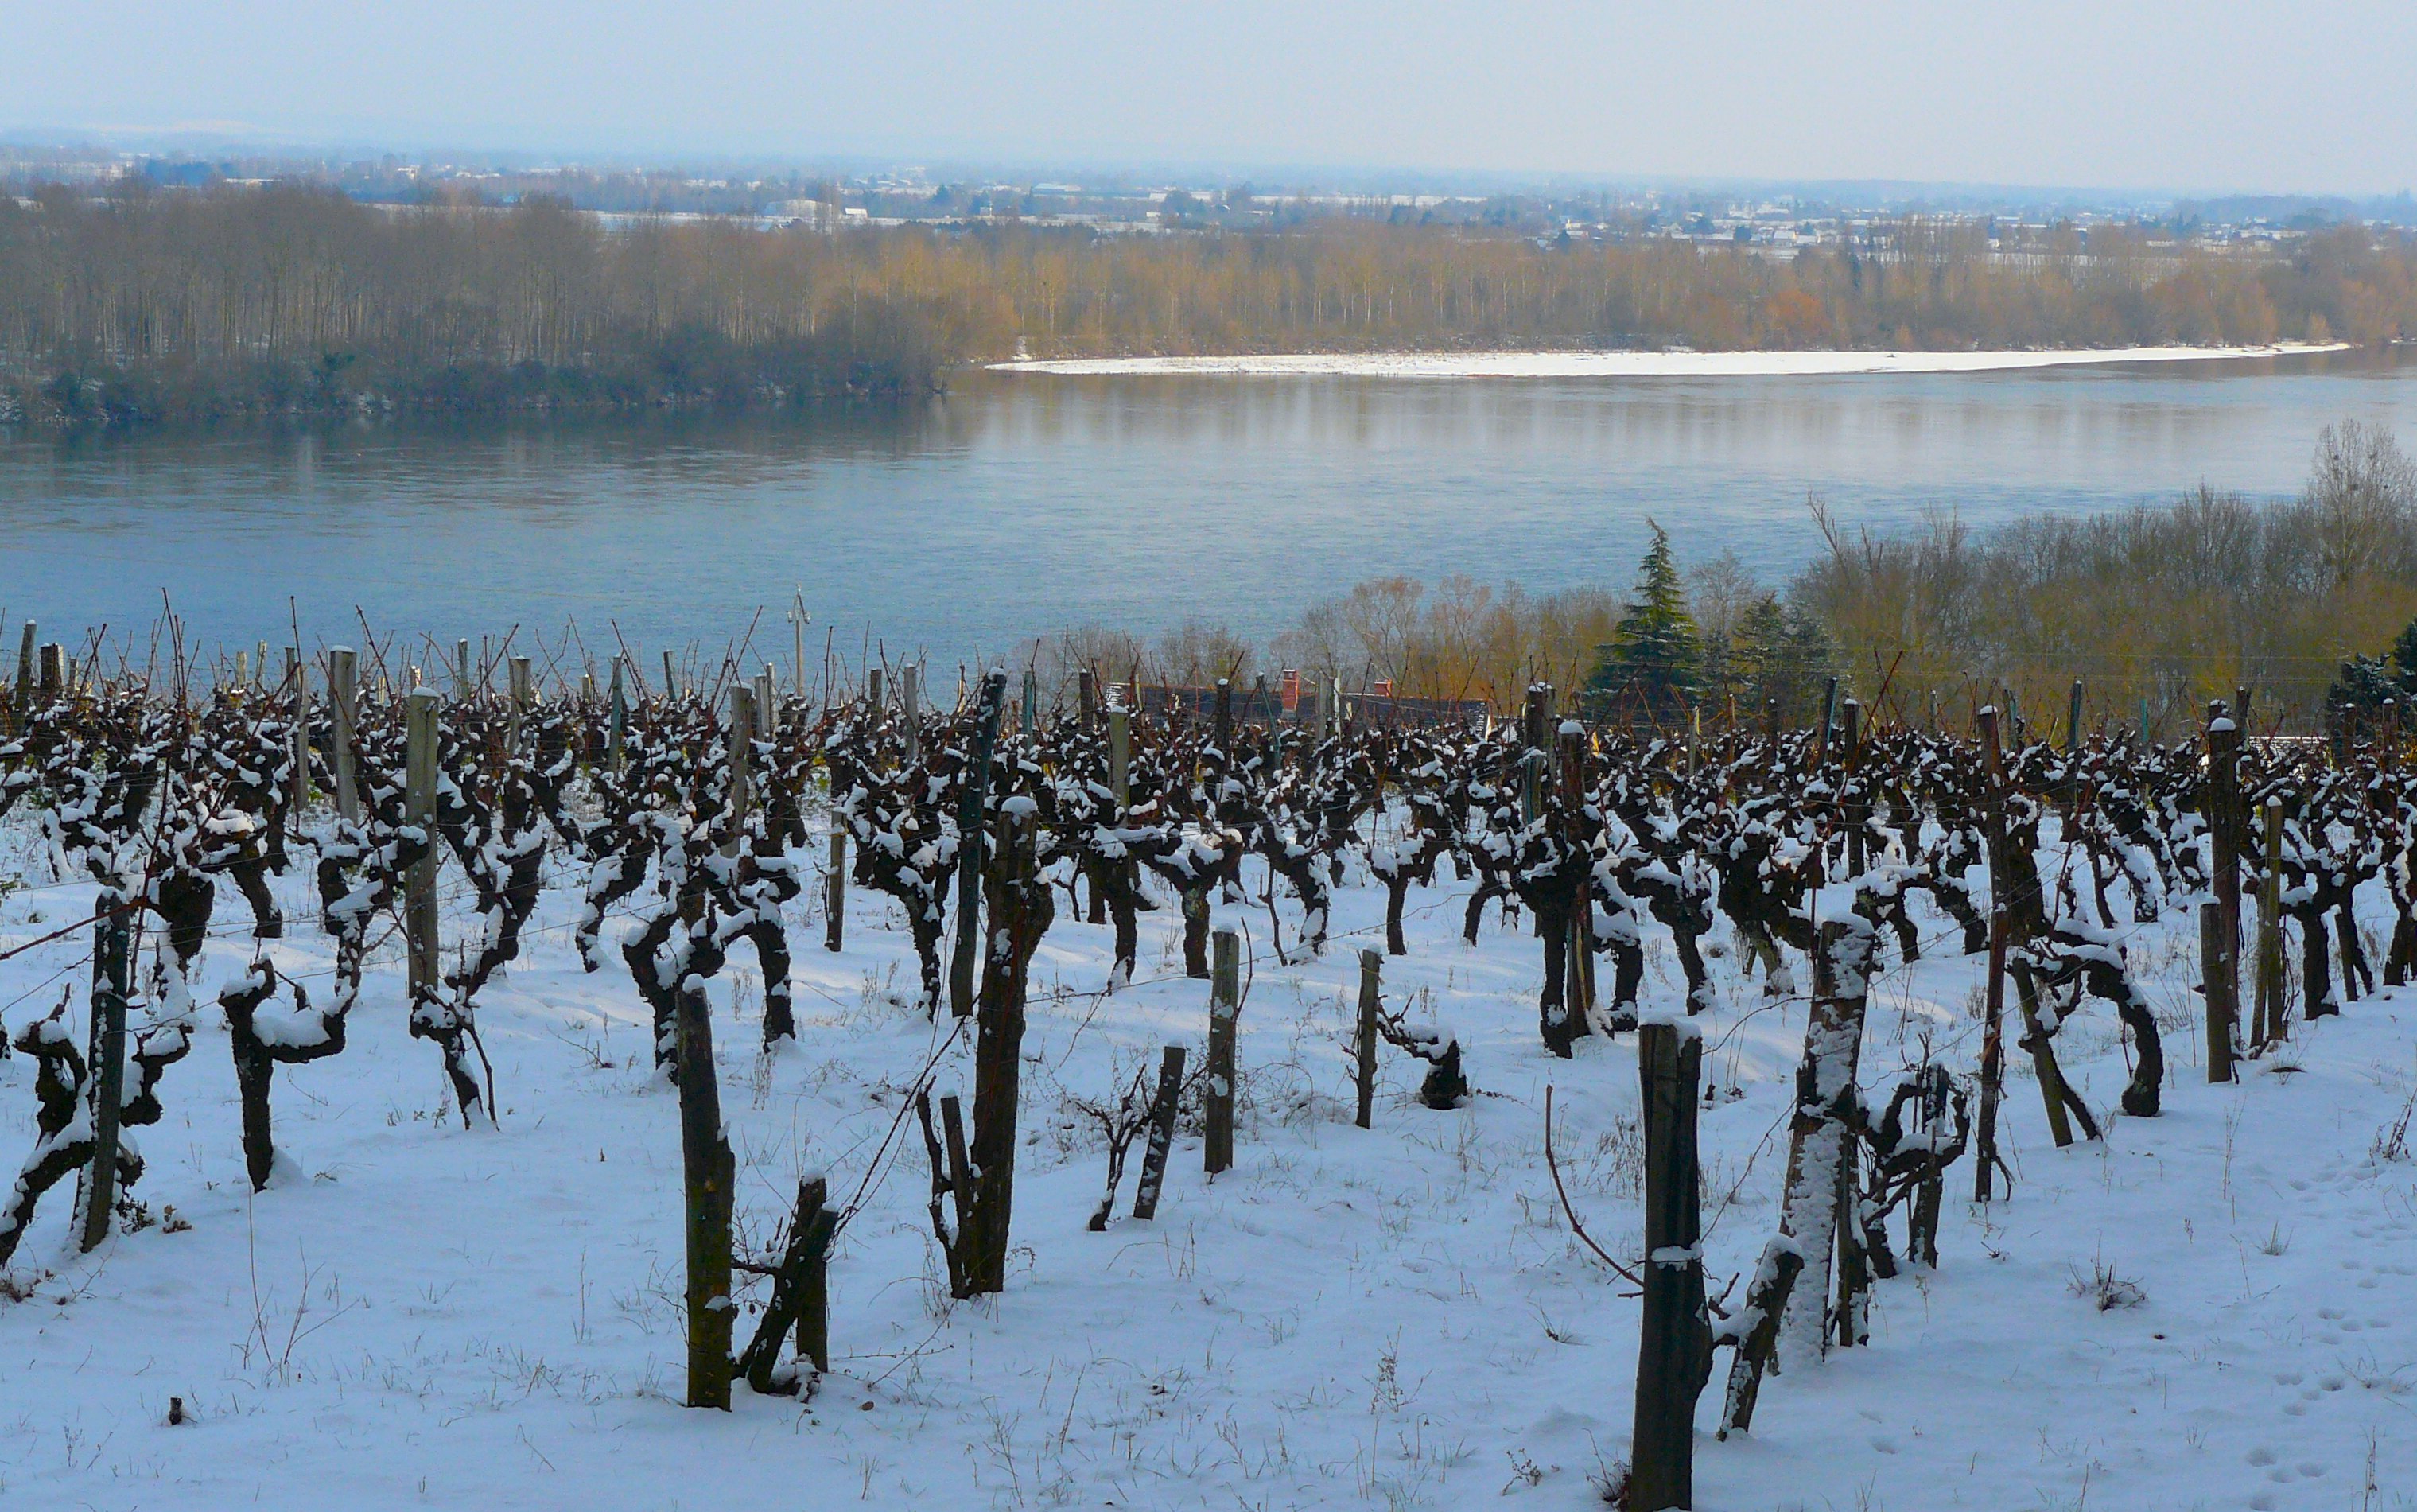 The Loire in December. Photo: C. Henton